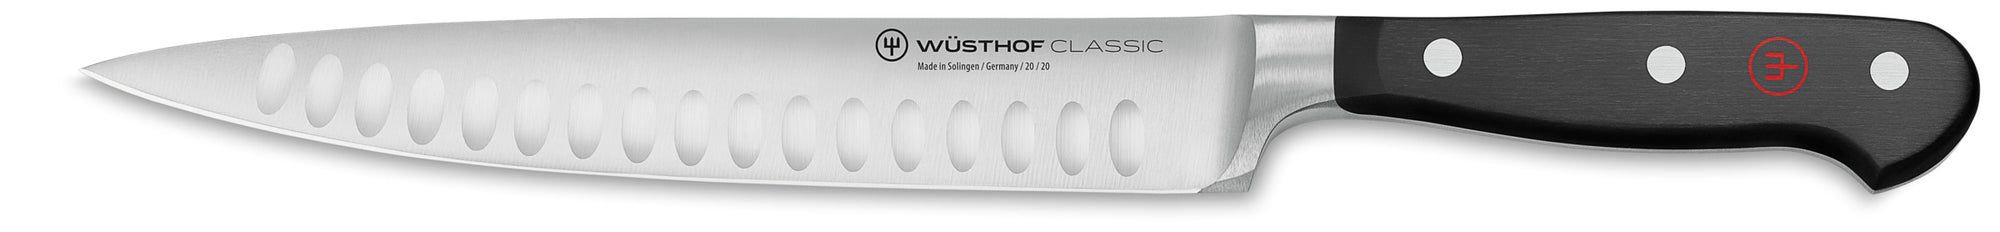 Wusthof Classic Carving Knife Granton Edge 9 inch 23cm Canada 4524-23